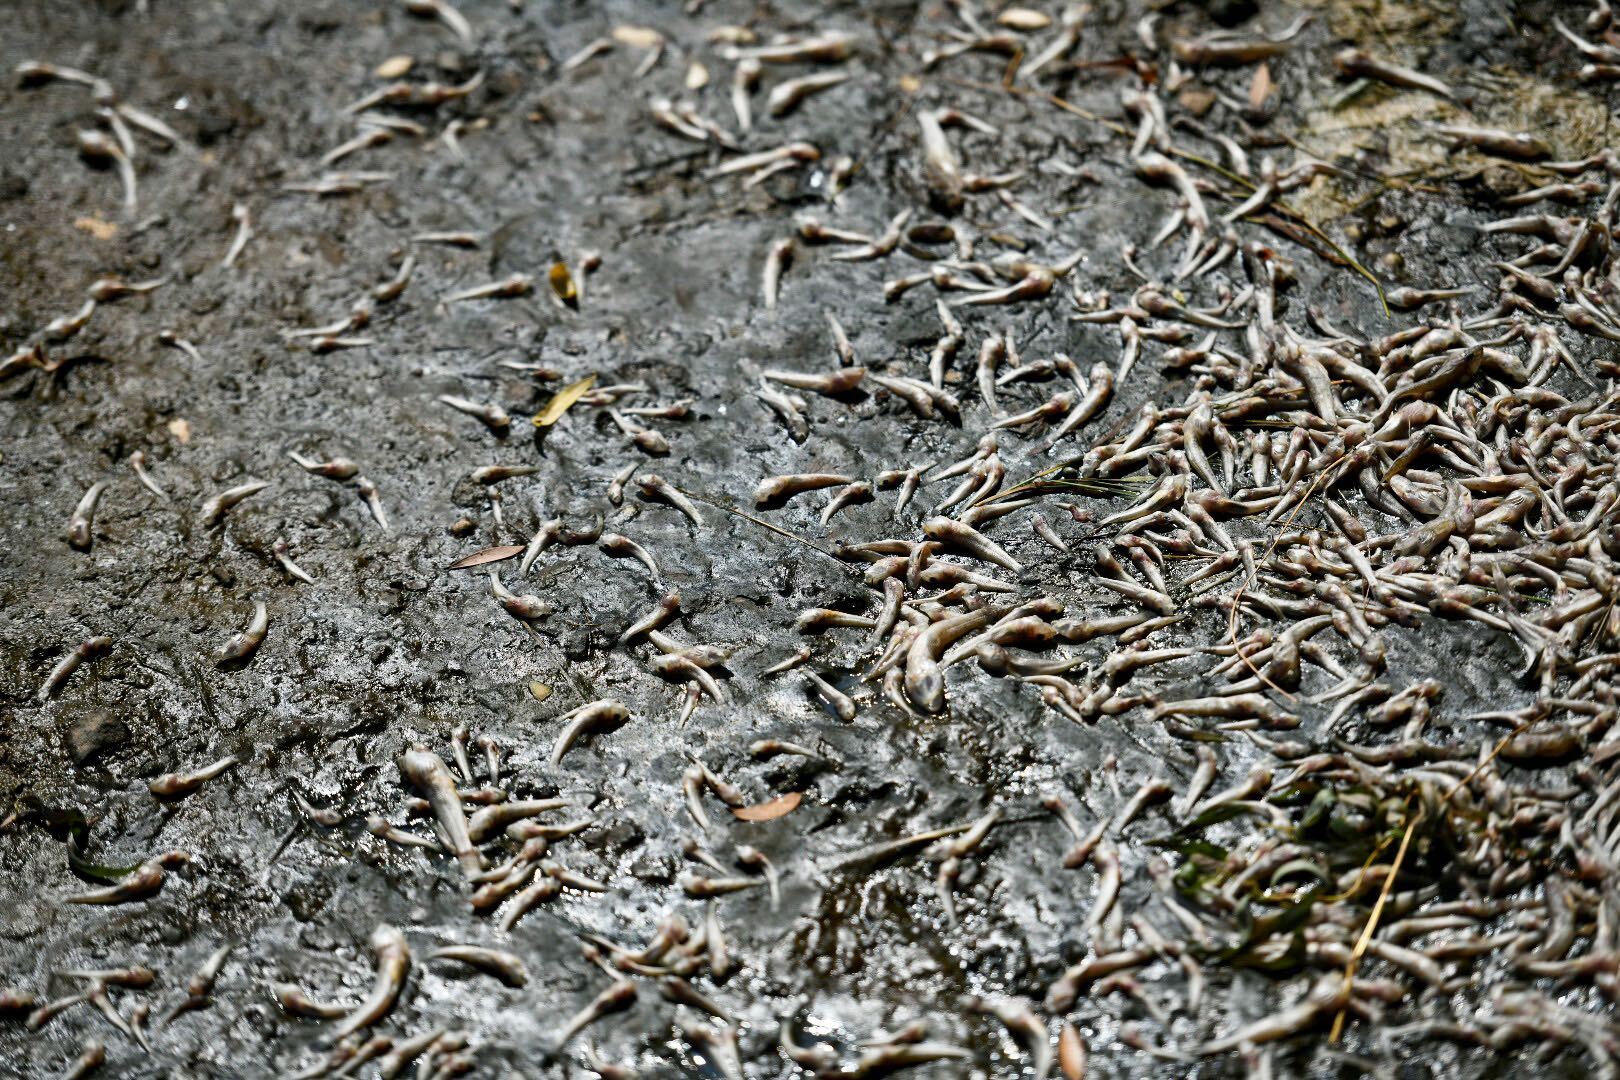 dead fish in the mud